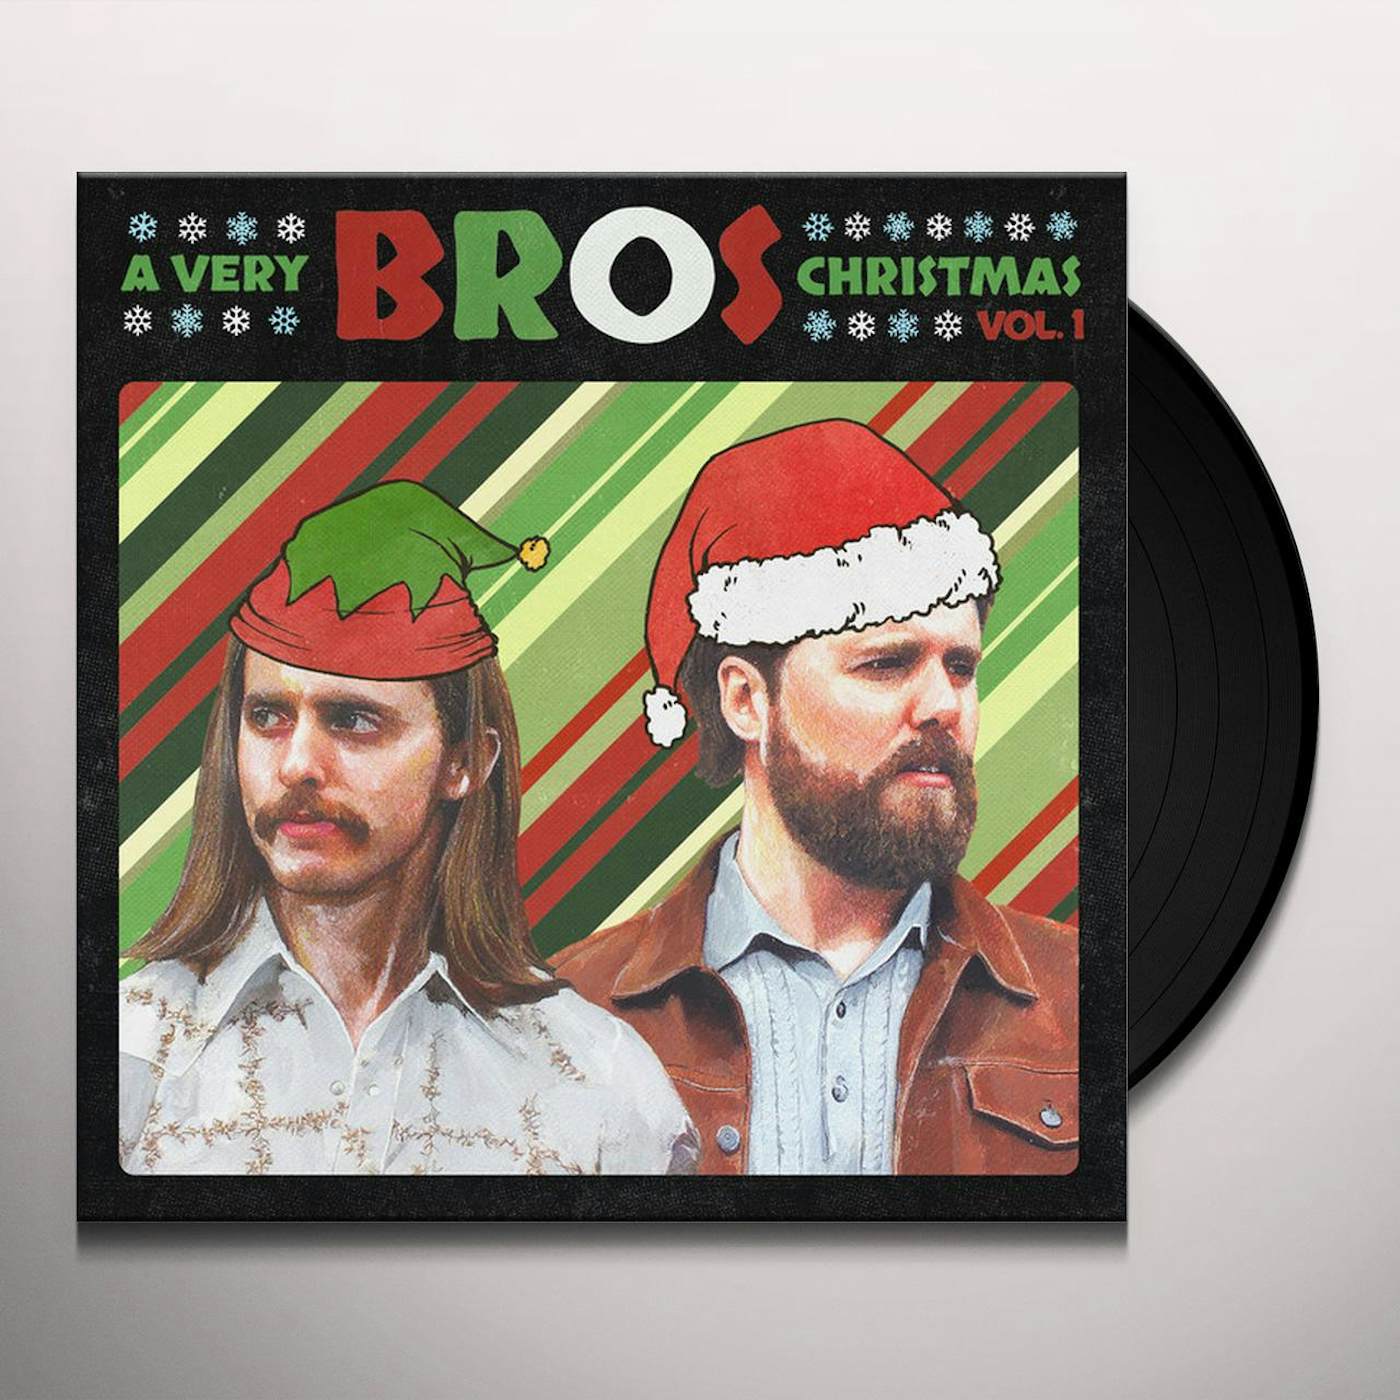 VERY BROS CHRISTMAS VOL 1 Vinyl Record